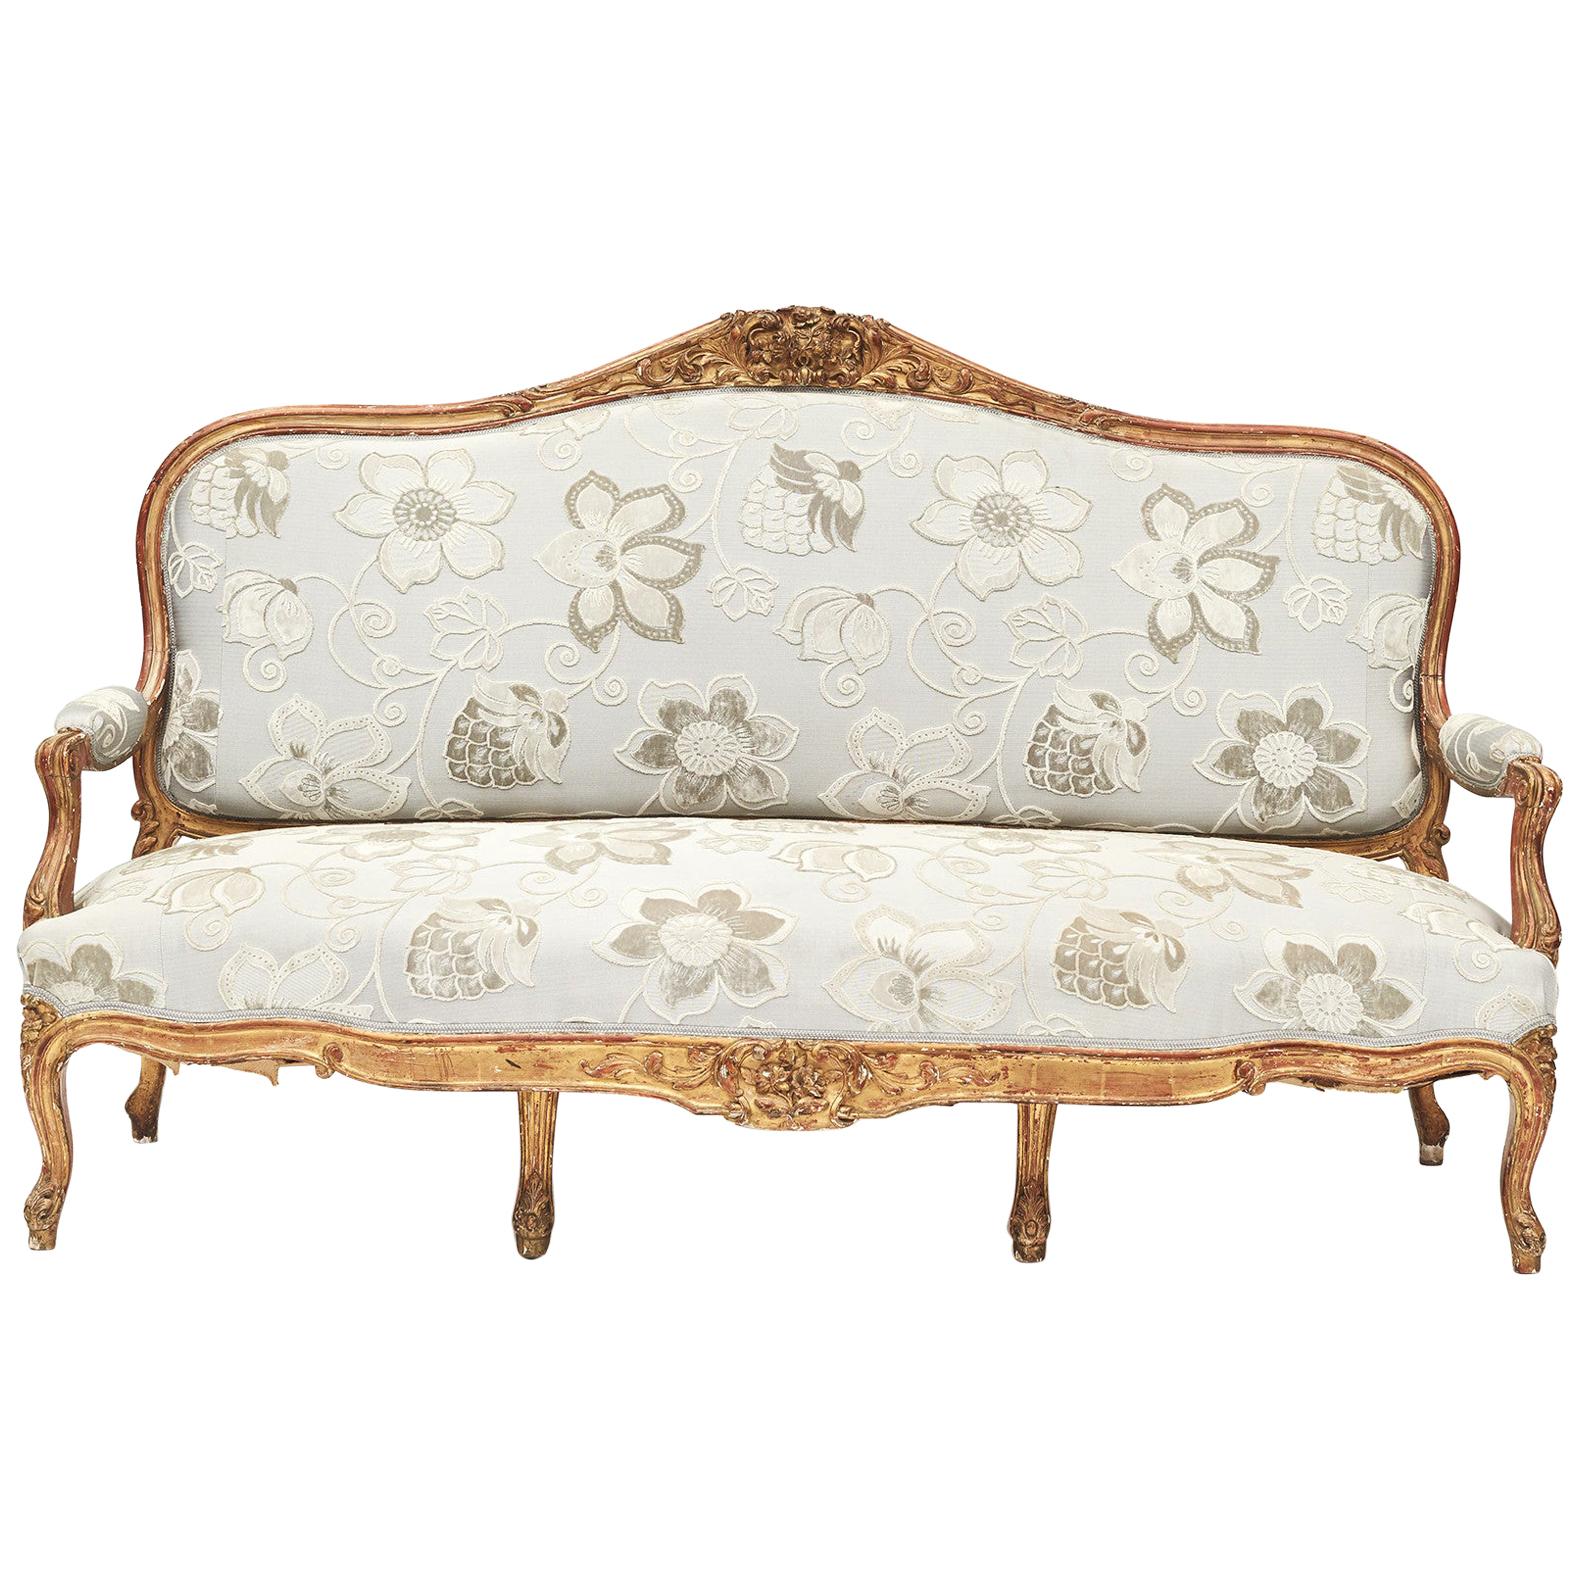 French Rococo Style Gilt Sofa Bench